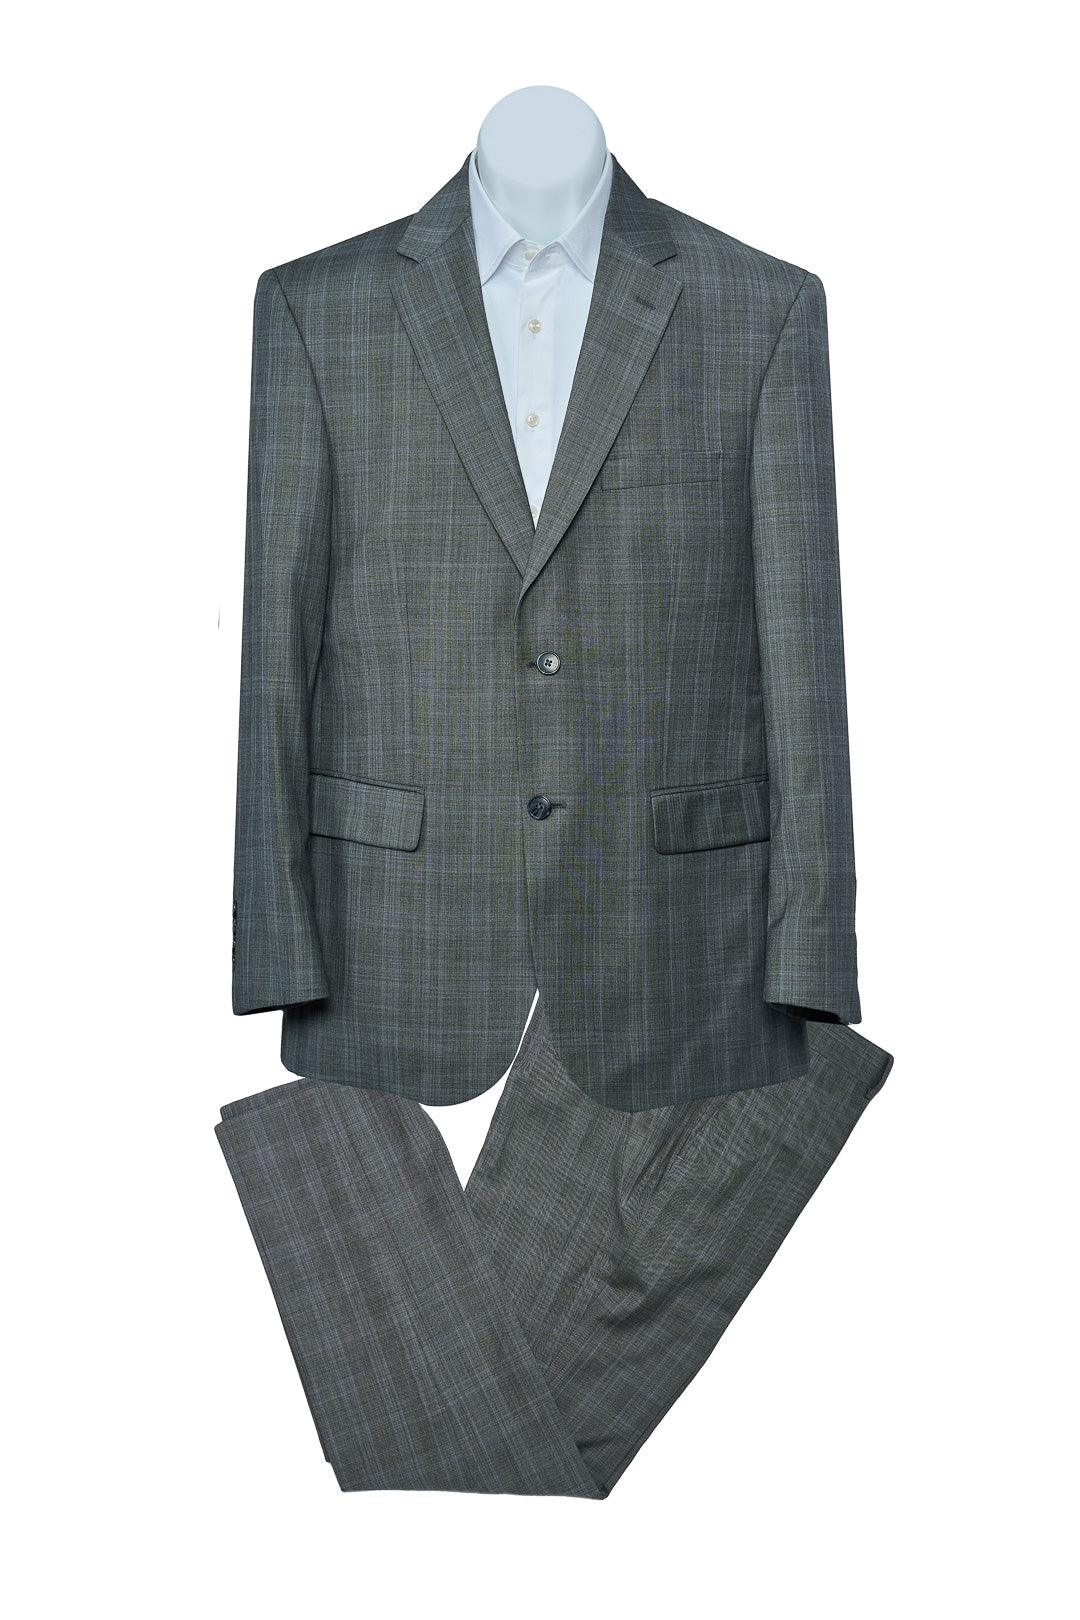 Gray & Light Blue Check Suit